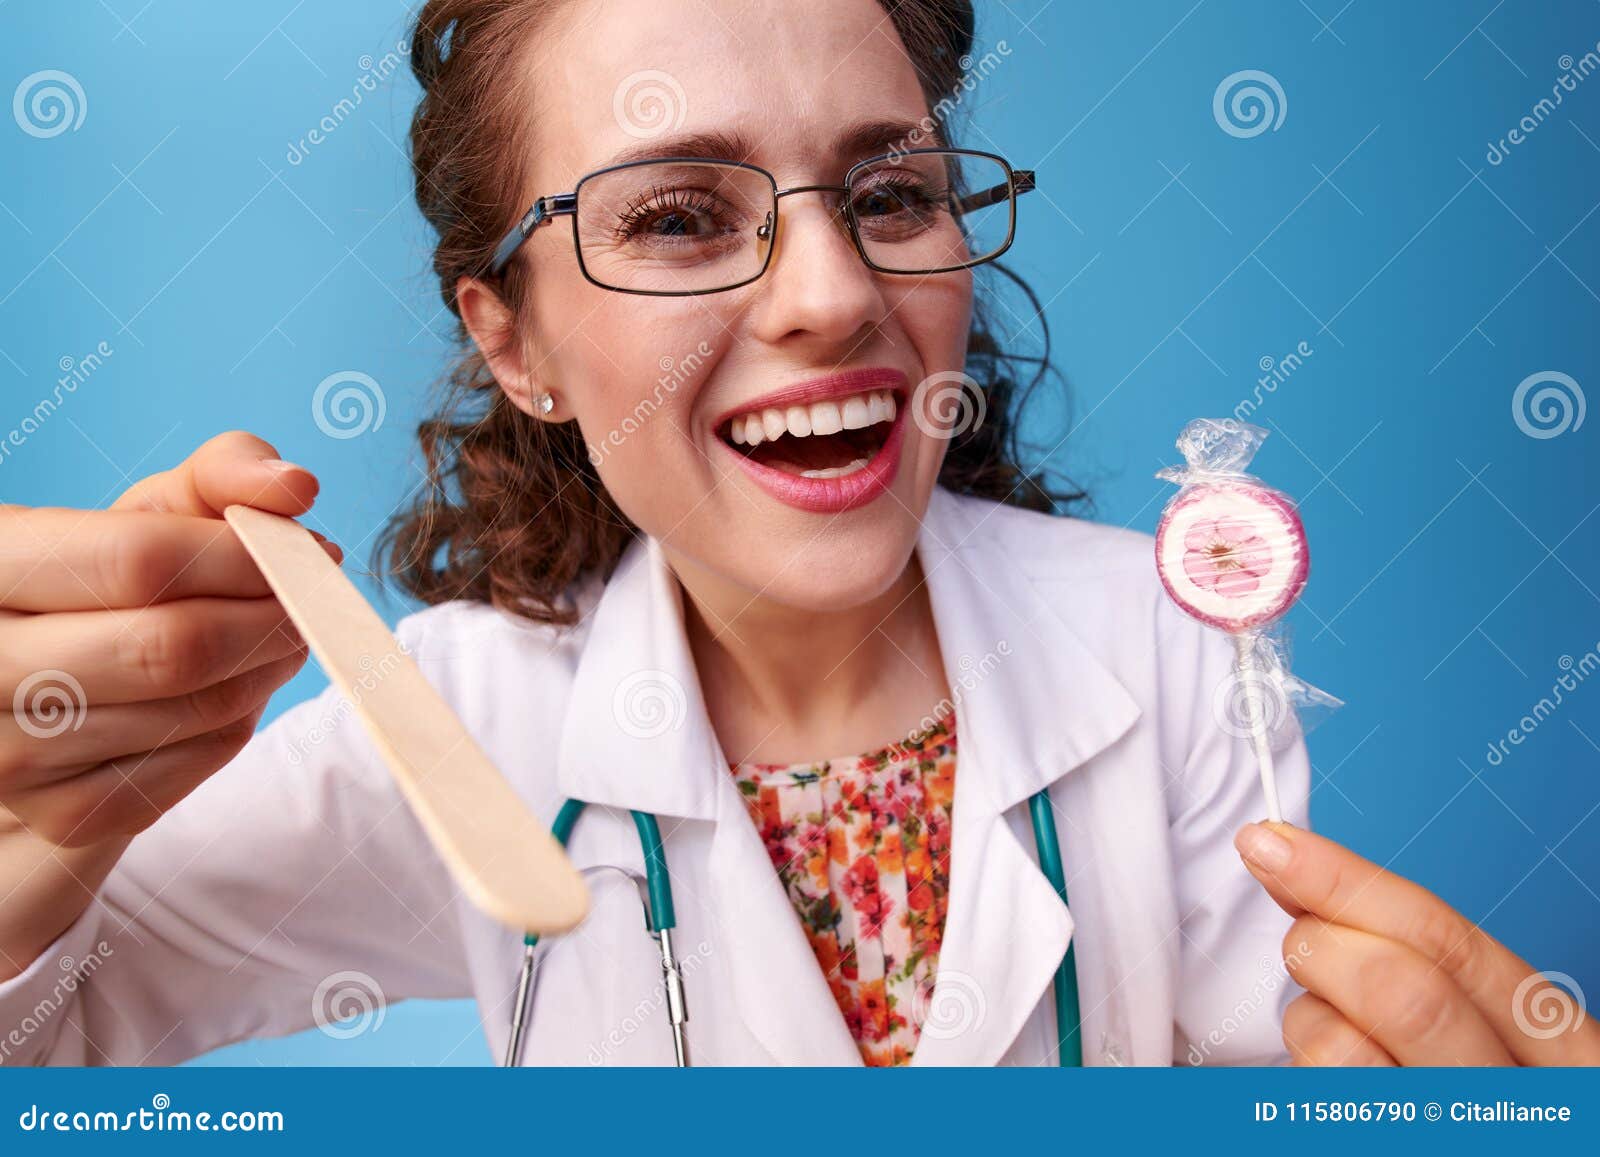 pediatrist doctor with lollipop using spatula to examine throat